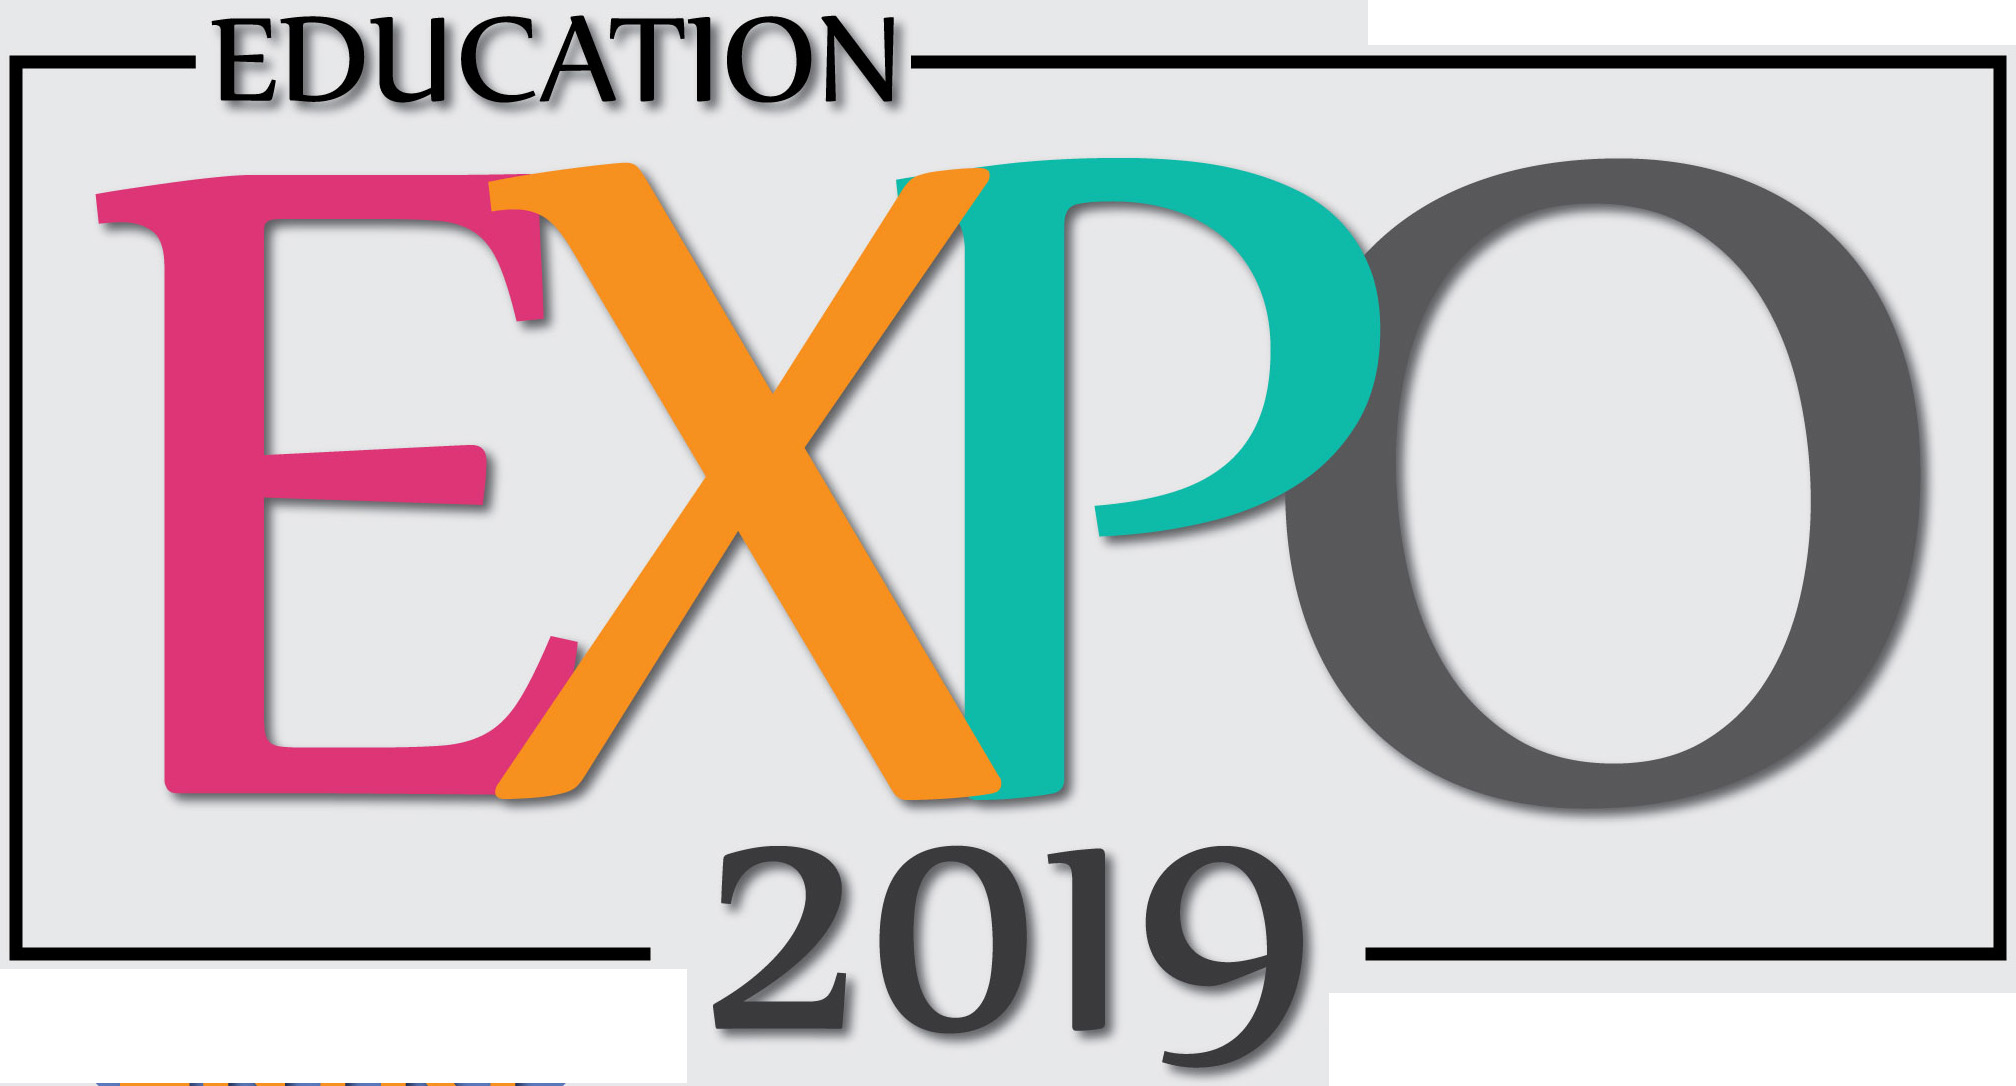 MakeGenius Education Expo 2019, Pondicherry, Puducherry, India